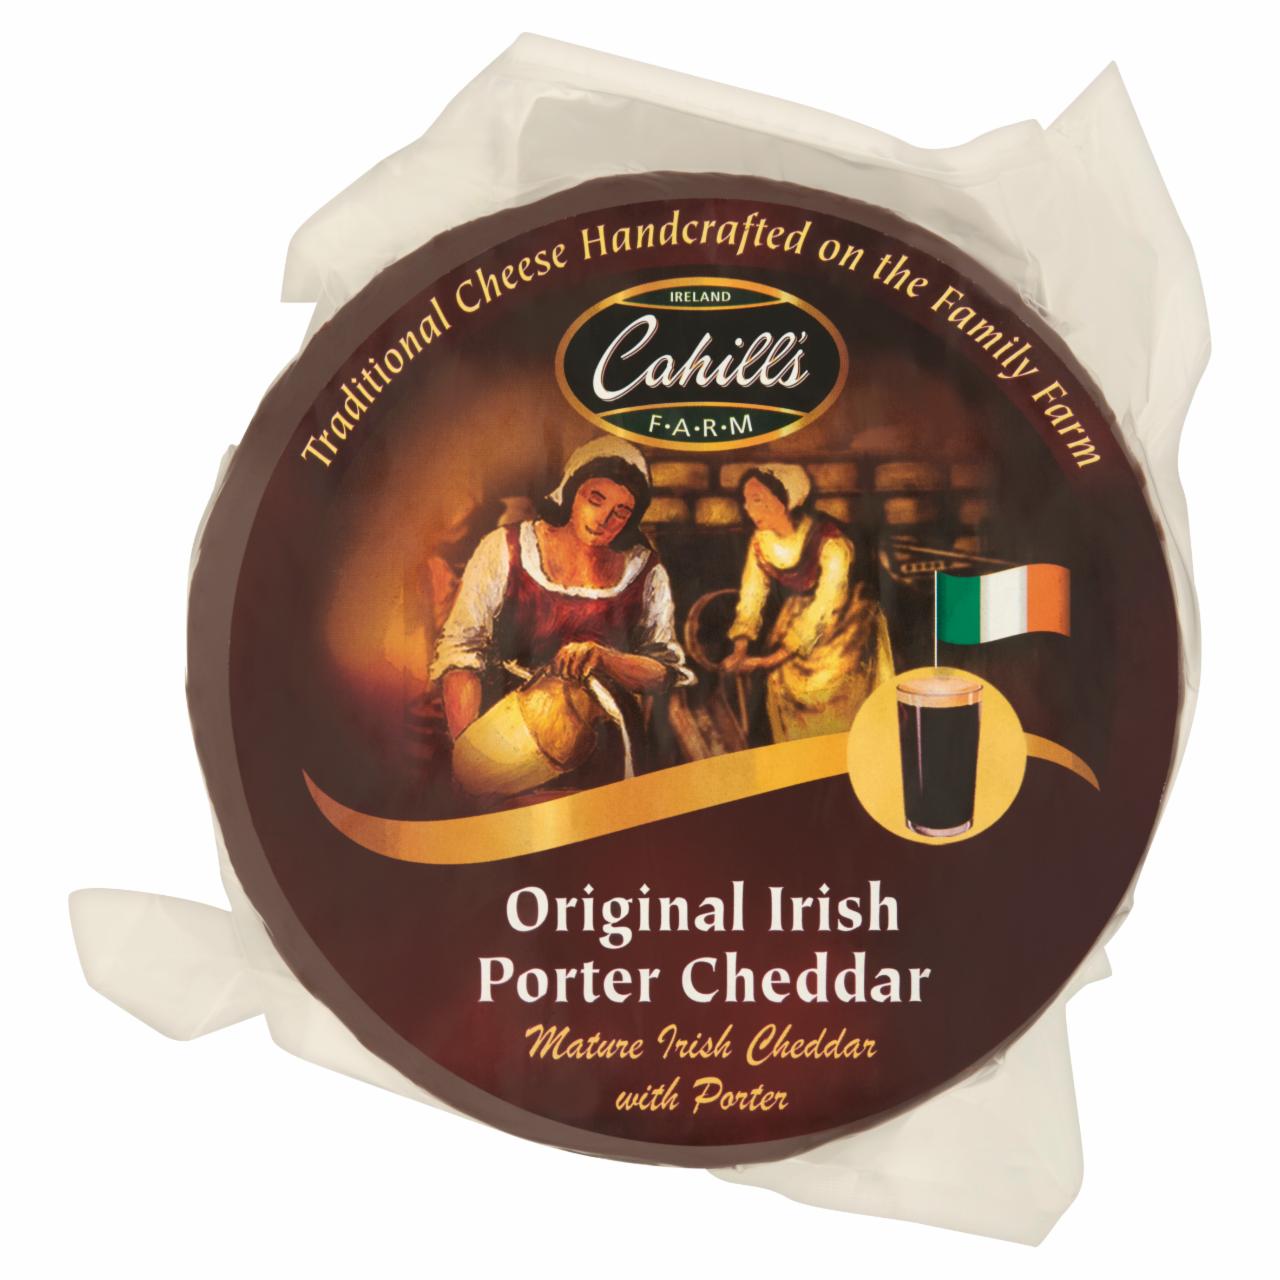 Képek - Cahill's ír Porter féle, sörös, zsíros kemény cheddar sajt